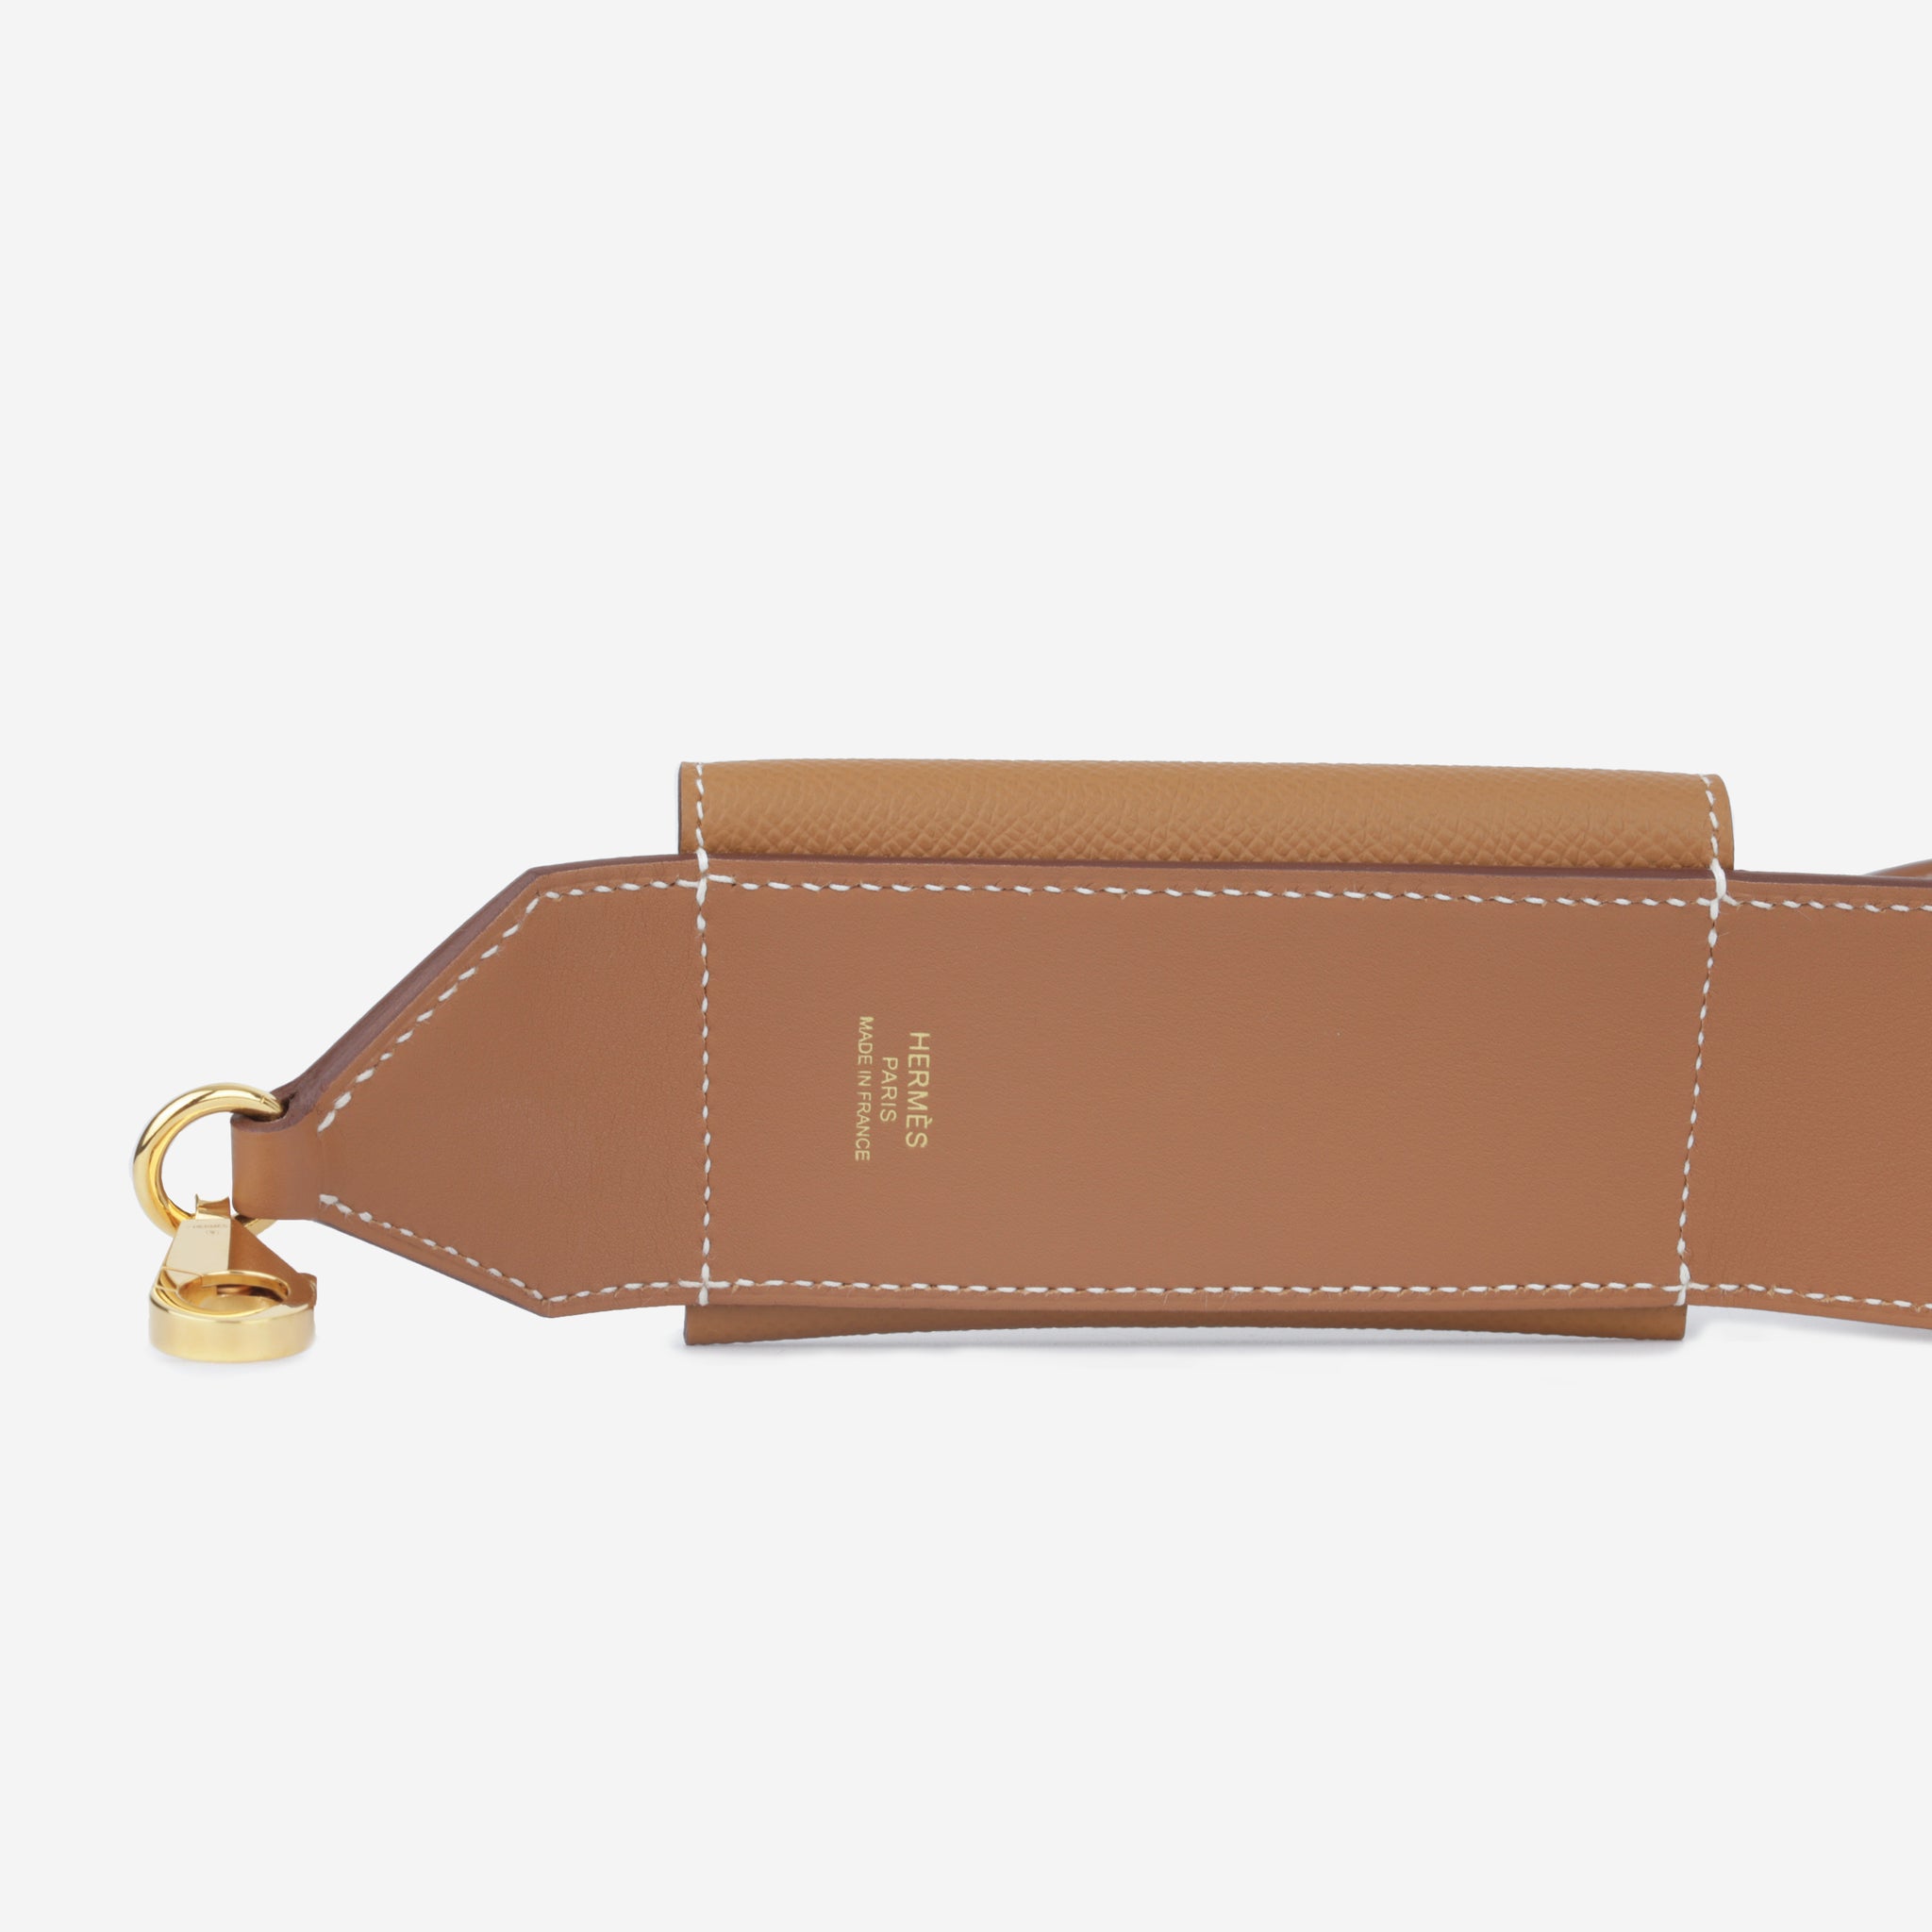 RARE New Hermes Kelly Pocket strap 105cm Neutral Tan Gold Biscuit